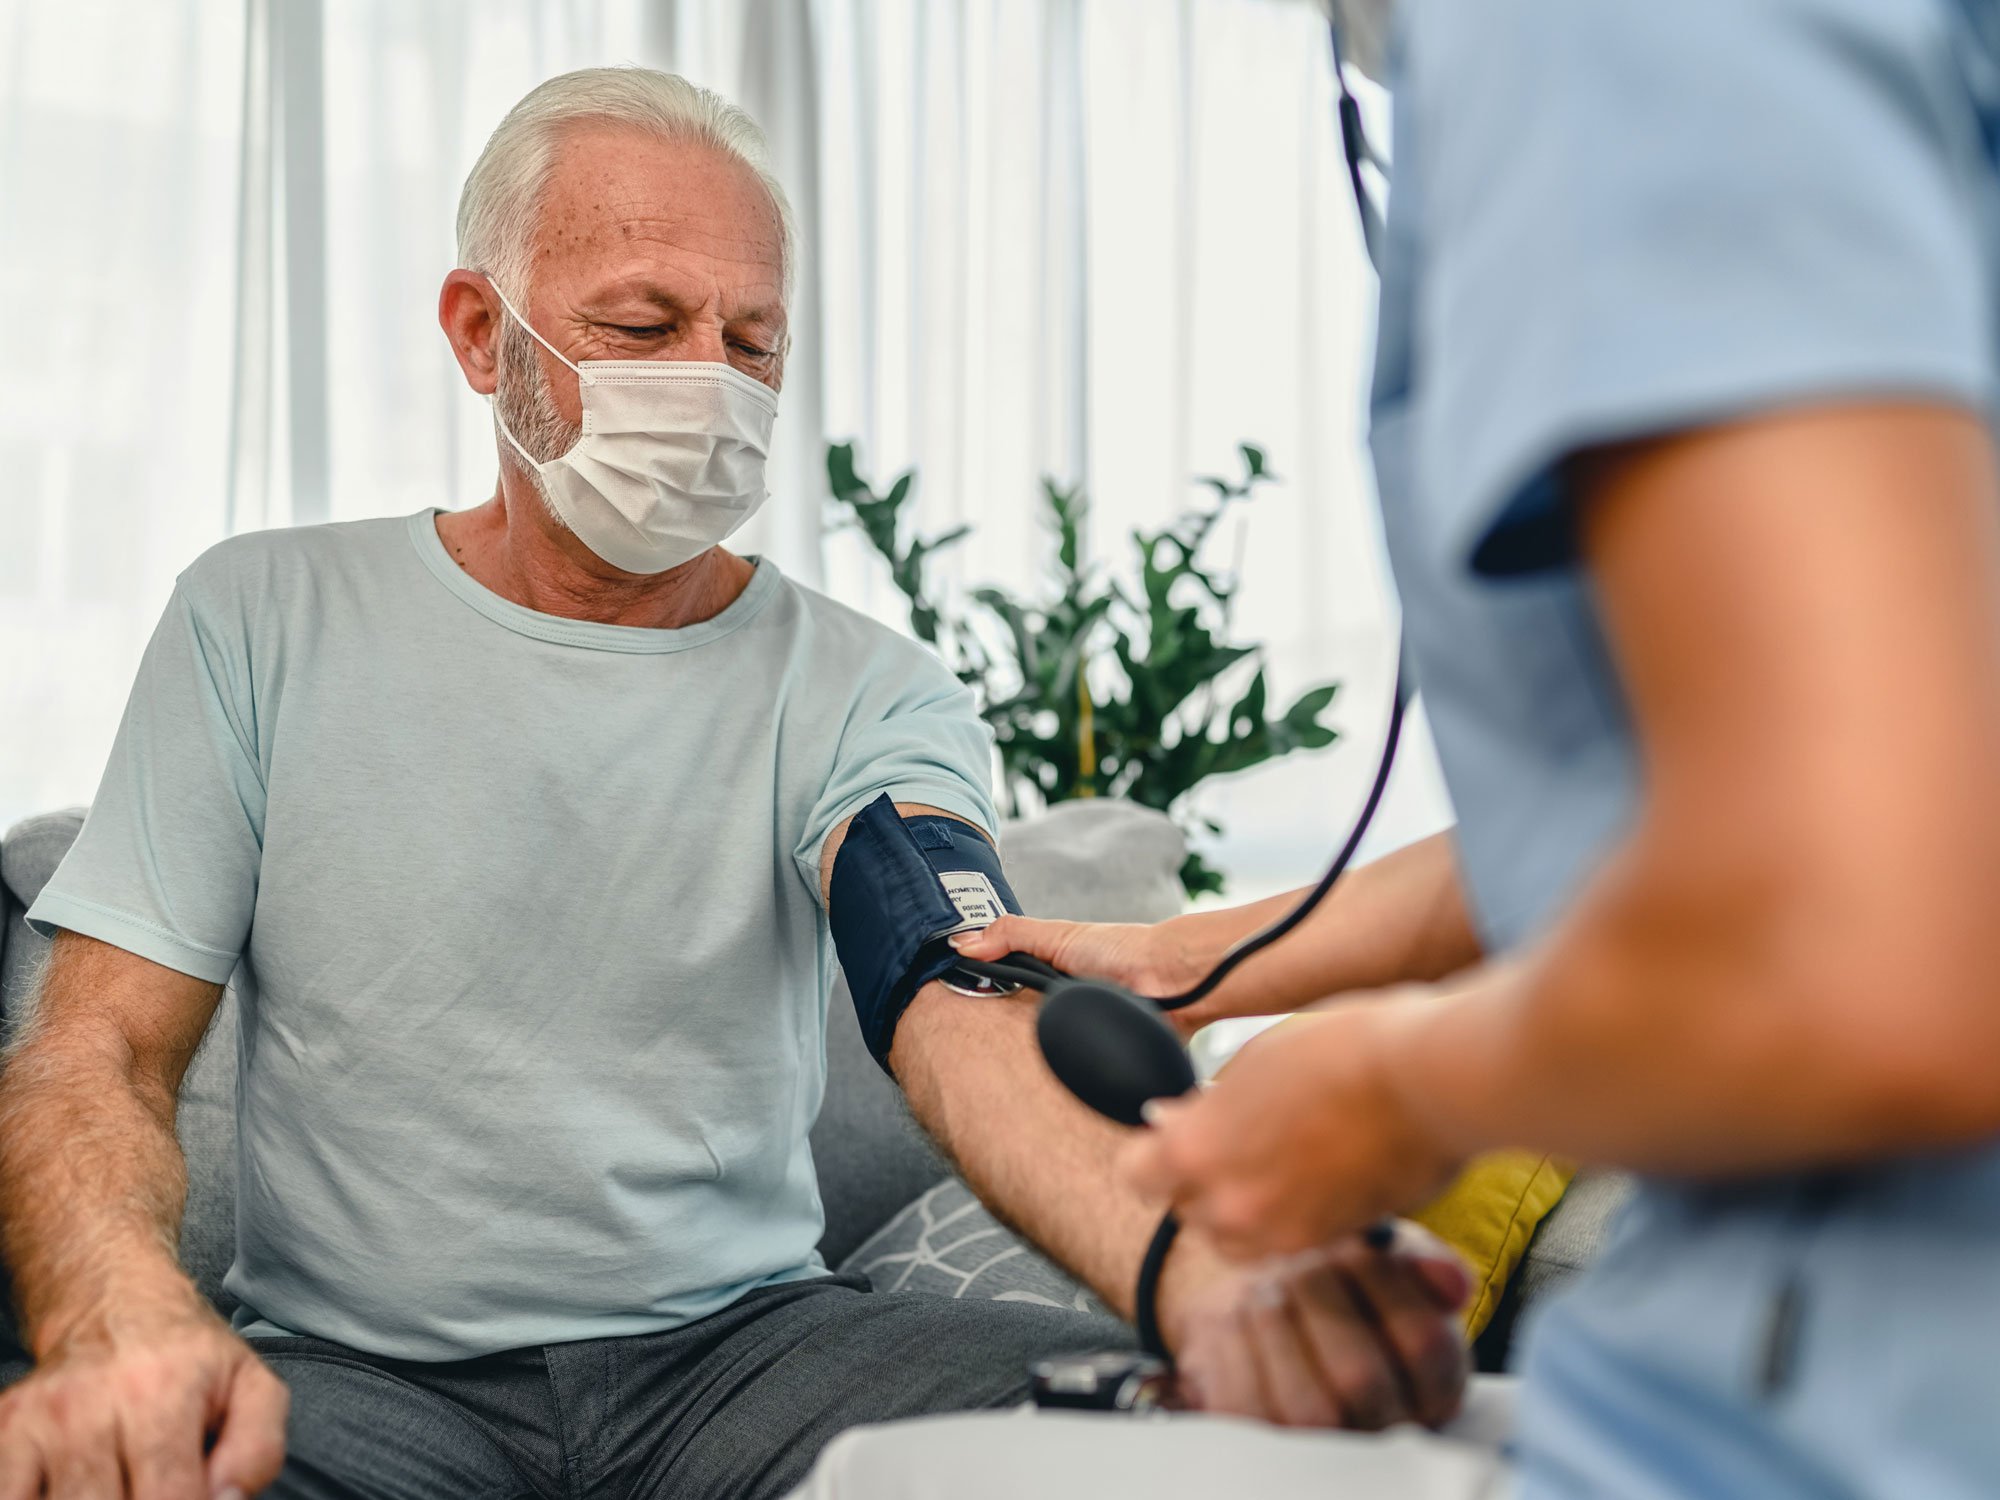 Man getting his blood pressure taken by a nurse.